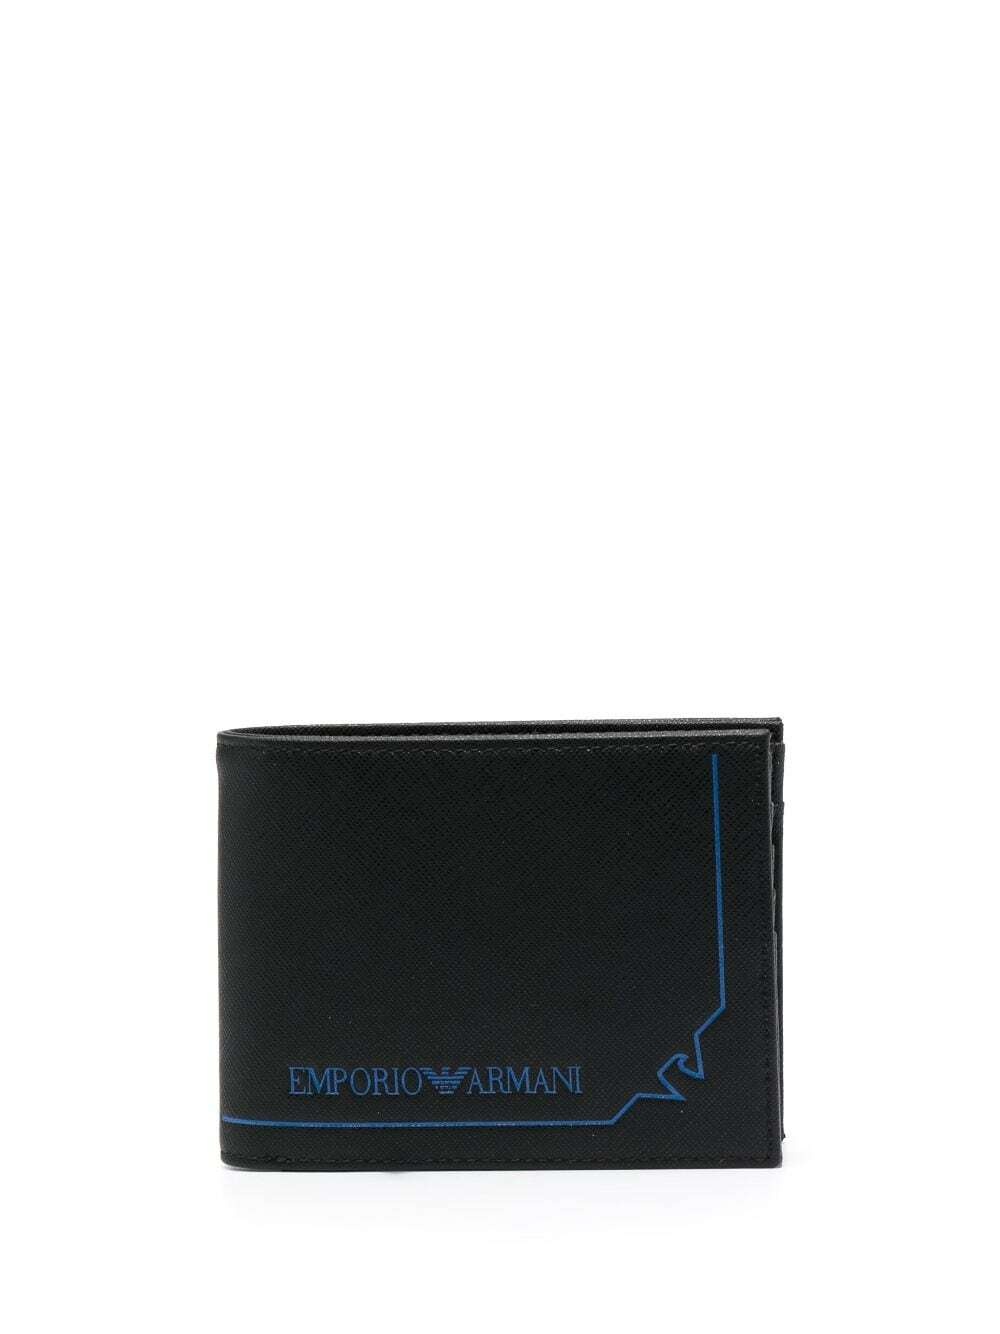 EMPORIO ARMANI - Logo Credit Card Case